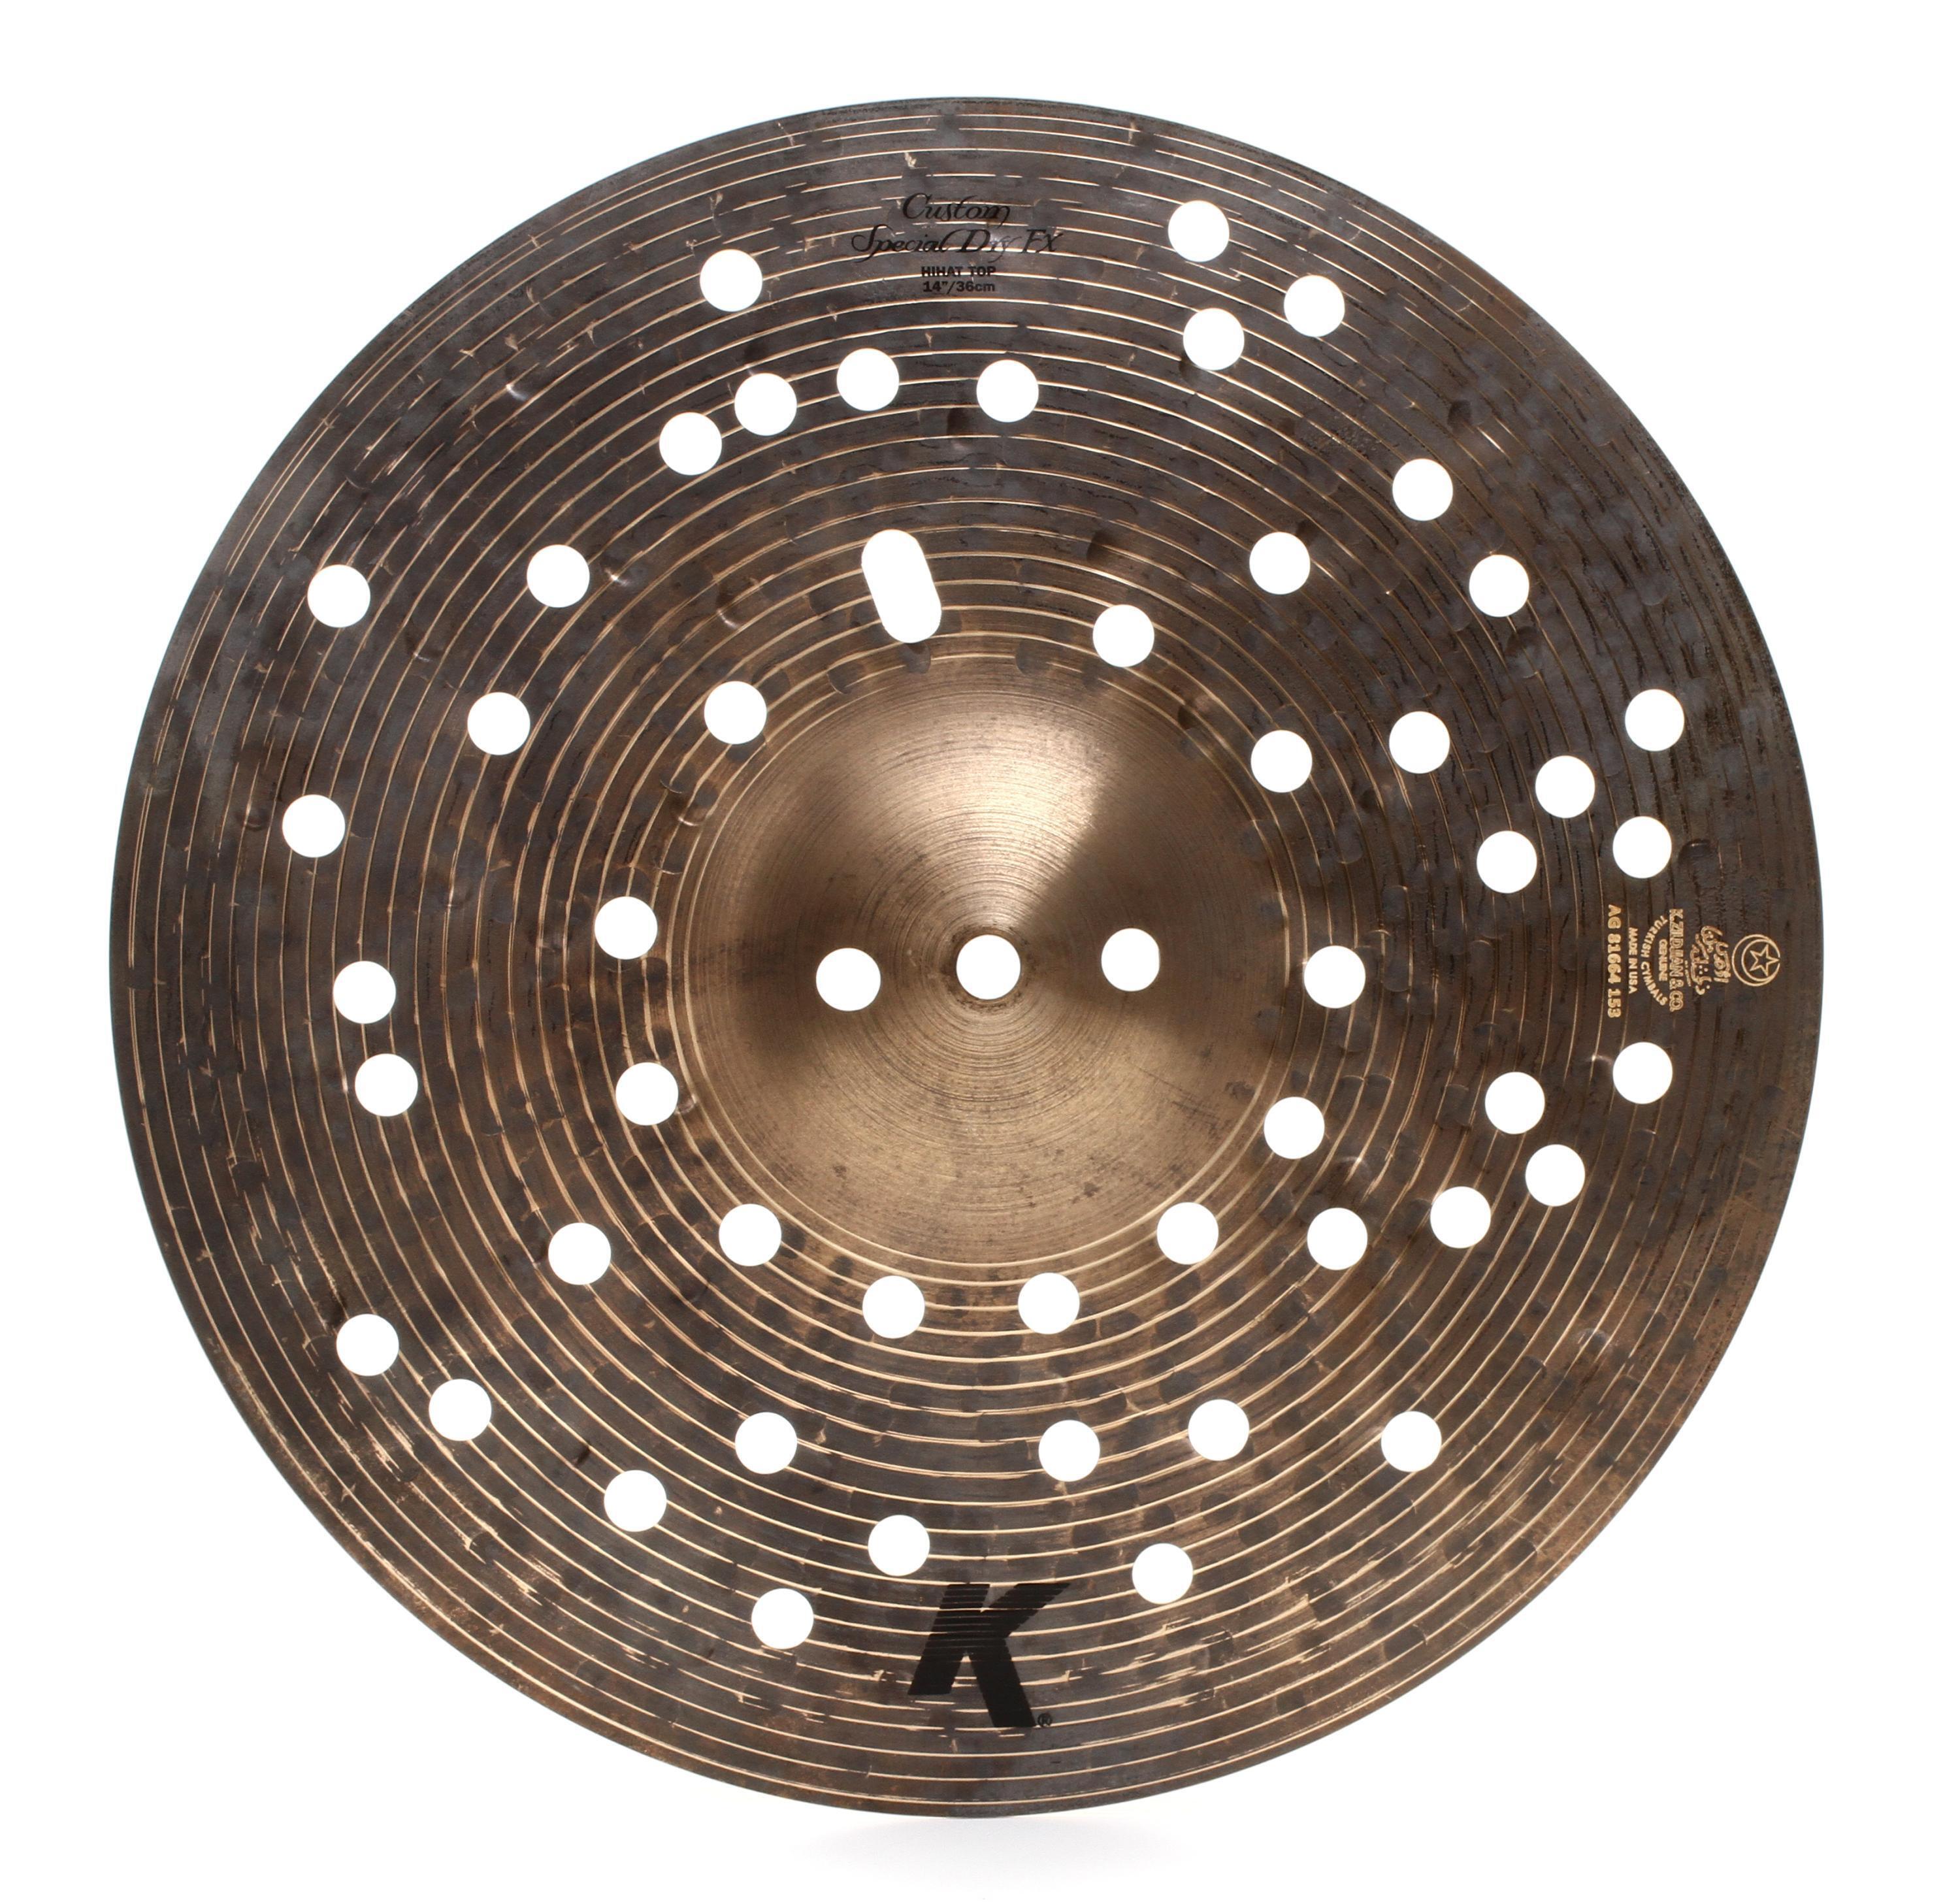 Zildjian 14 inch K Custom Special Dry FX Hi-hat Top Cymbal